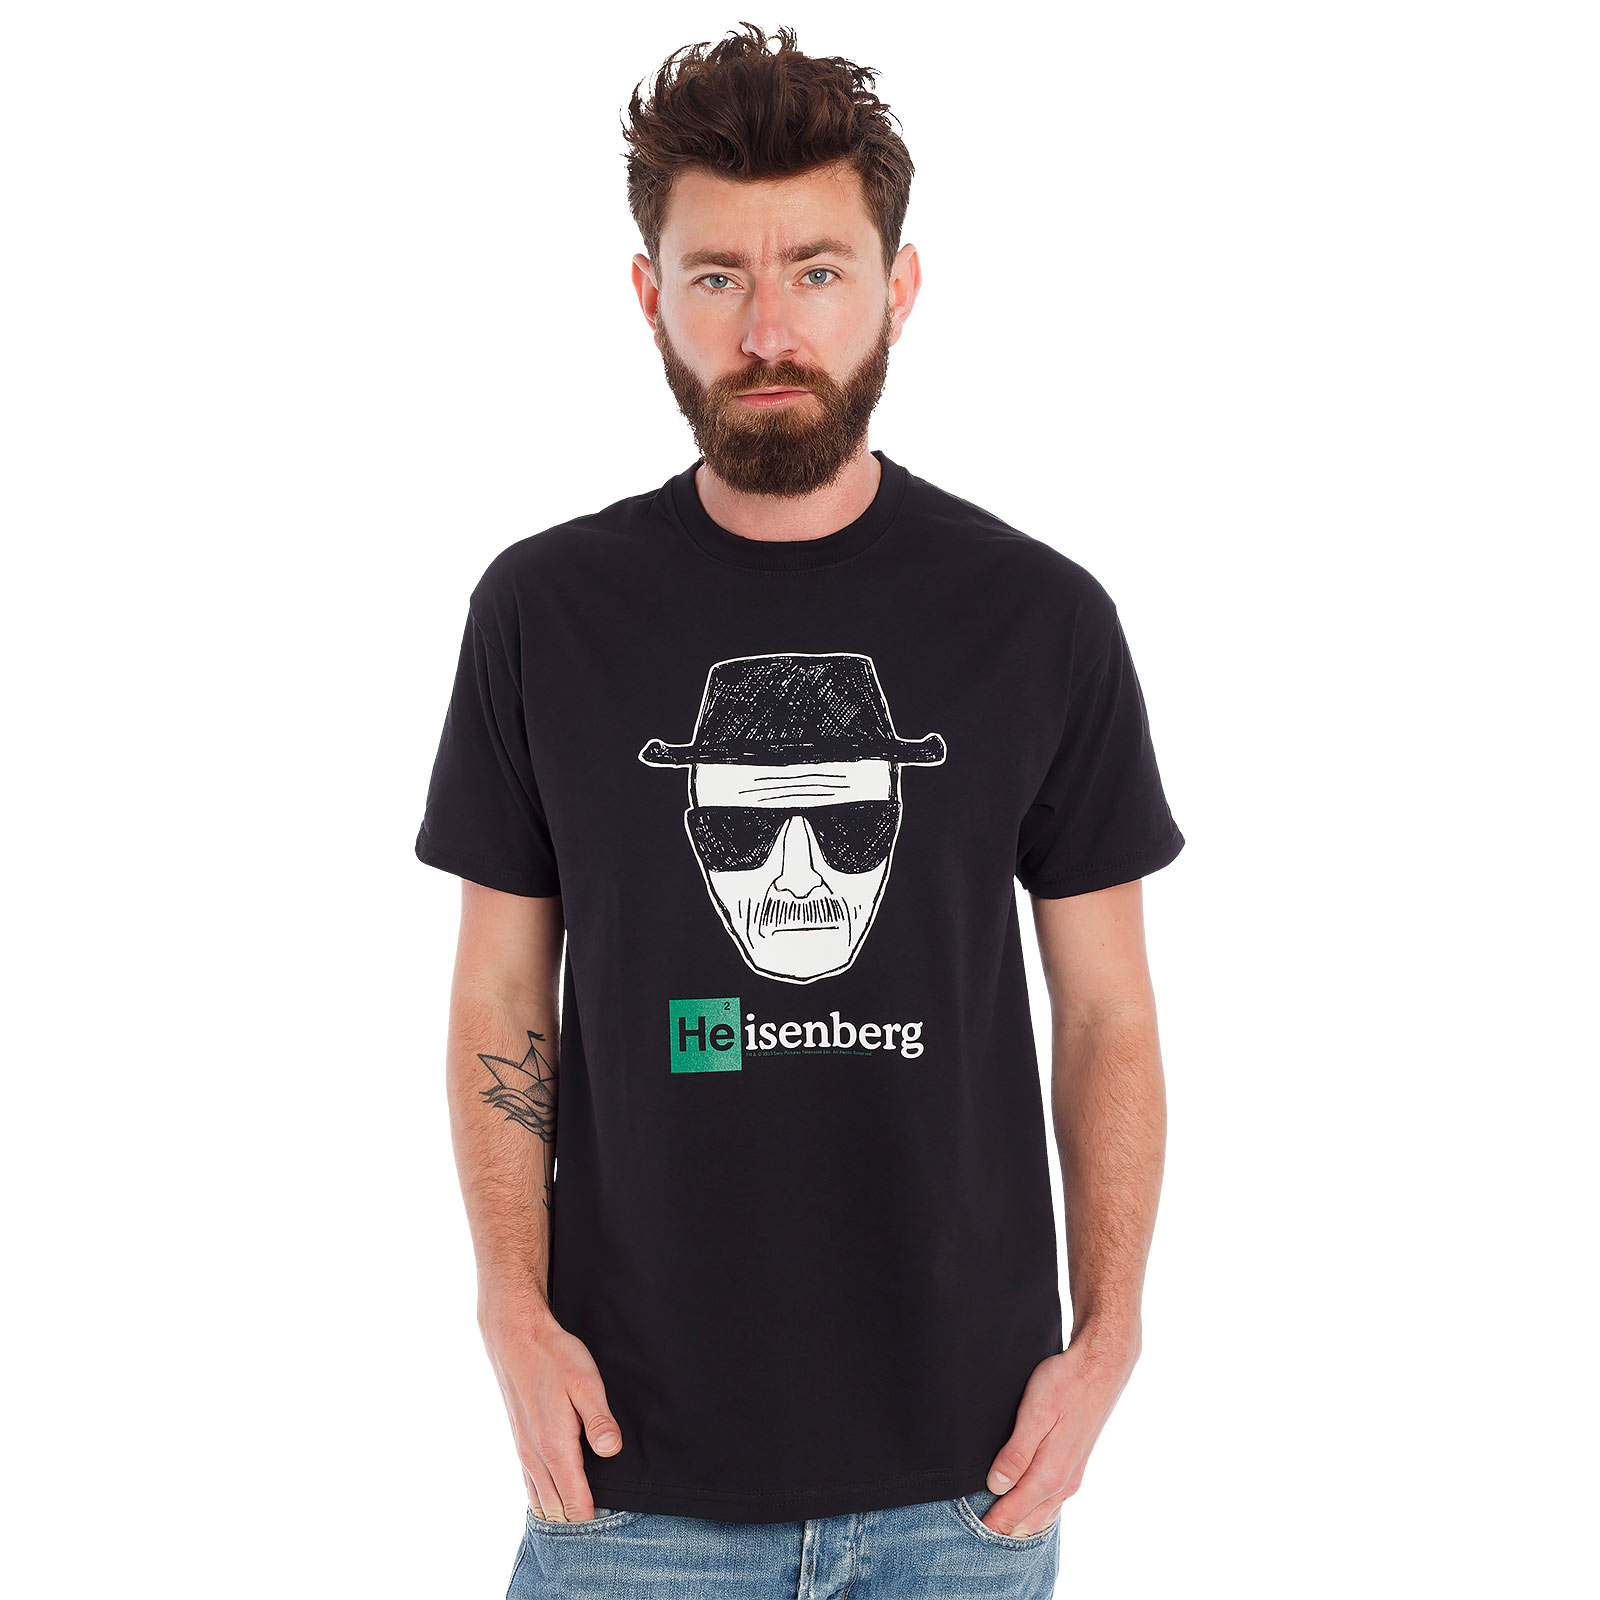 Breaking Bad - Wanted: Heisenberg T-Shirt